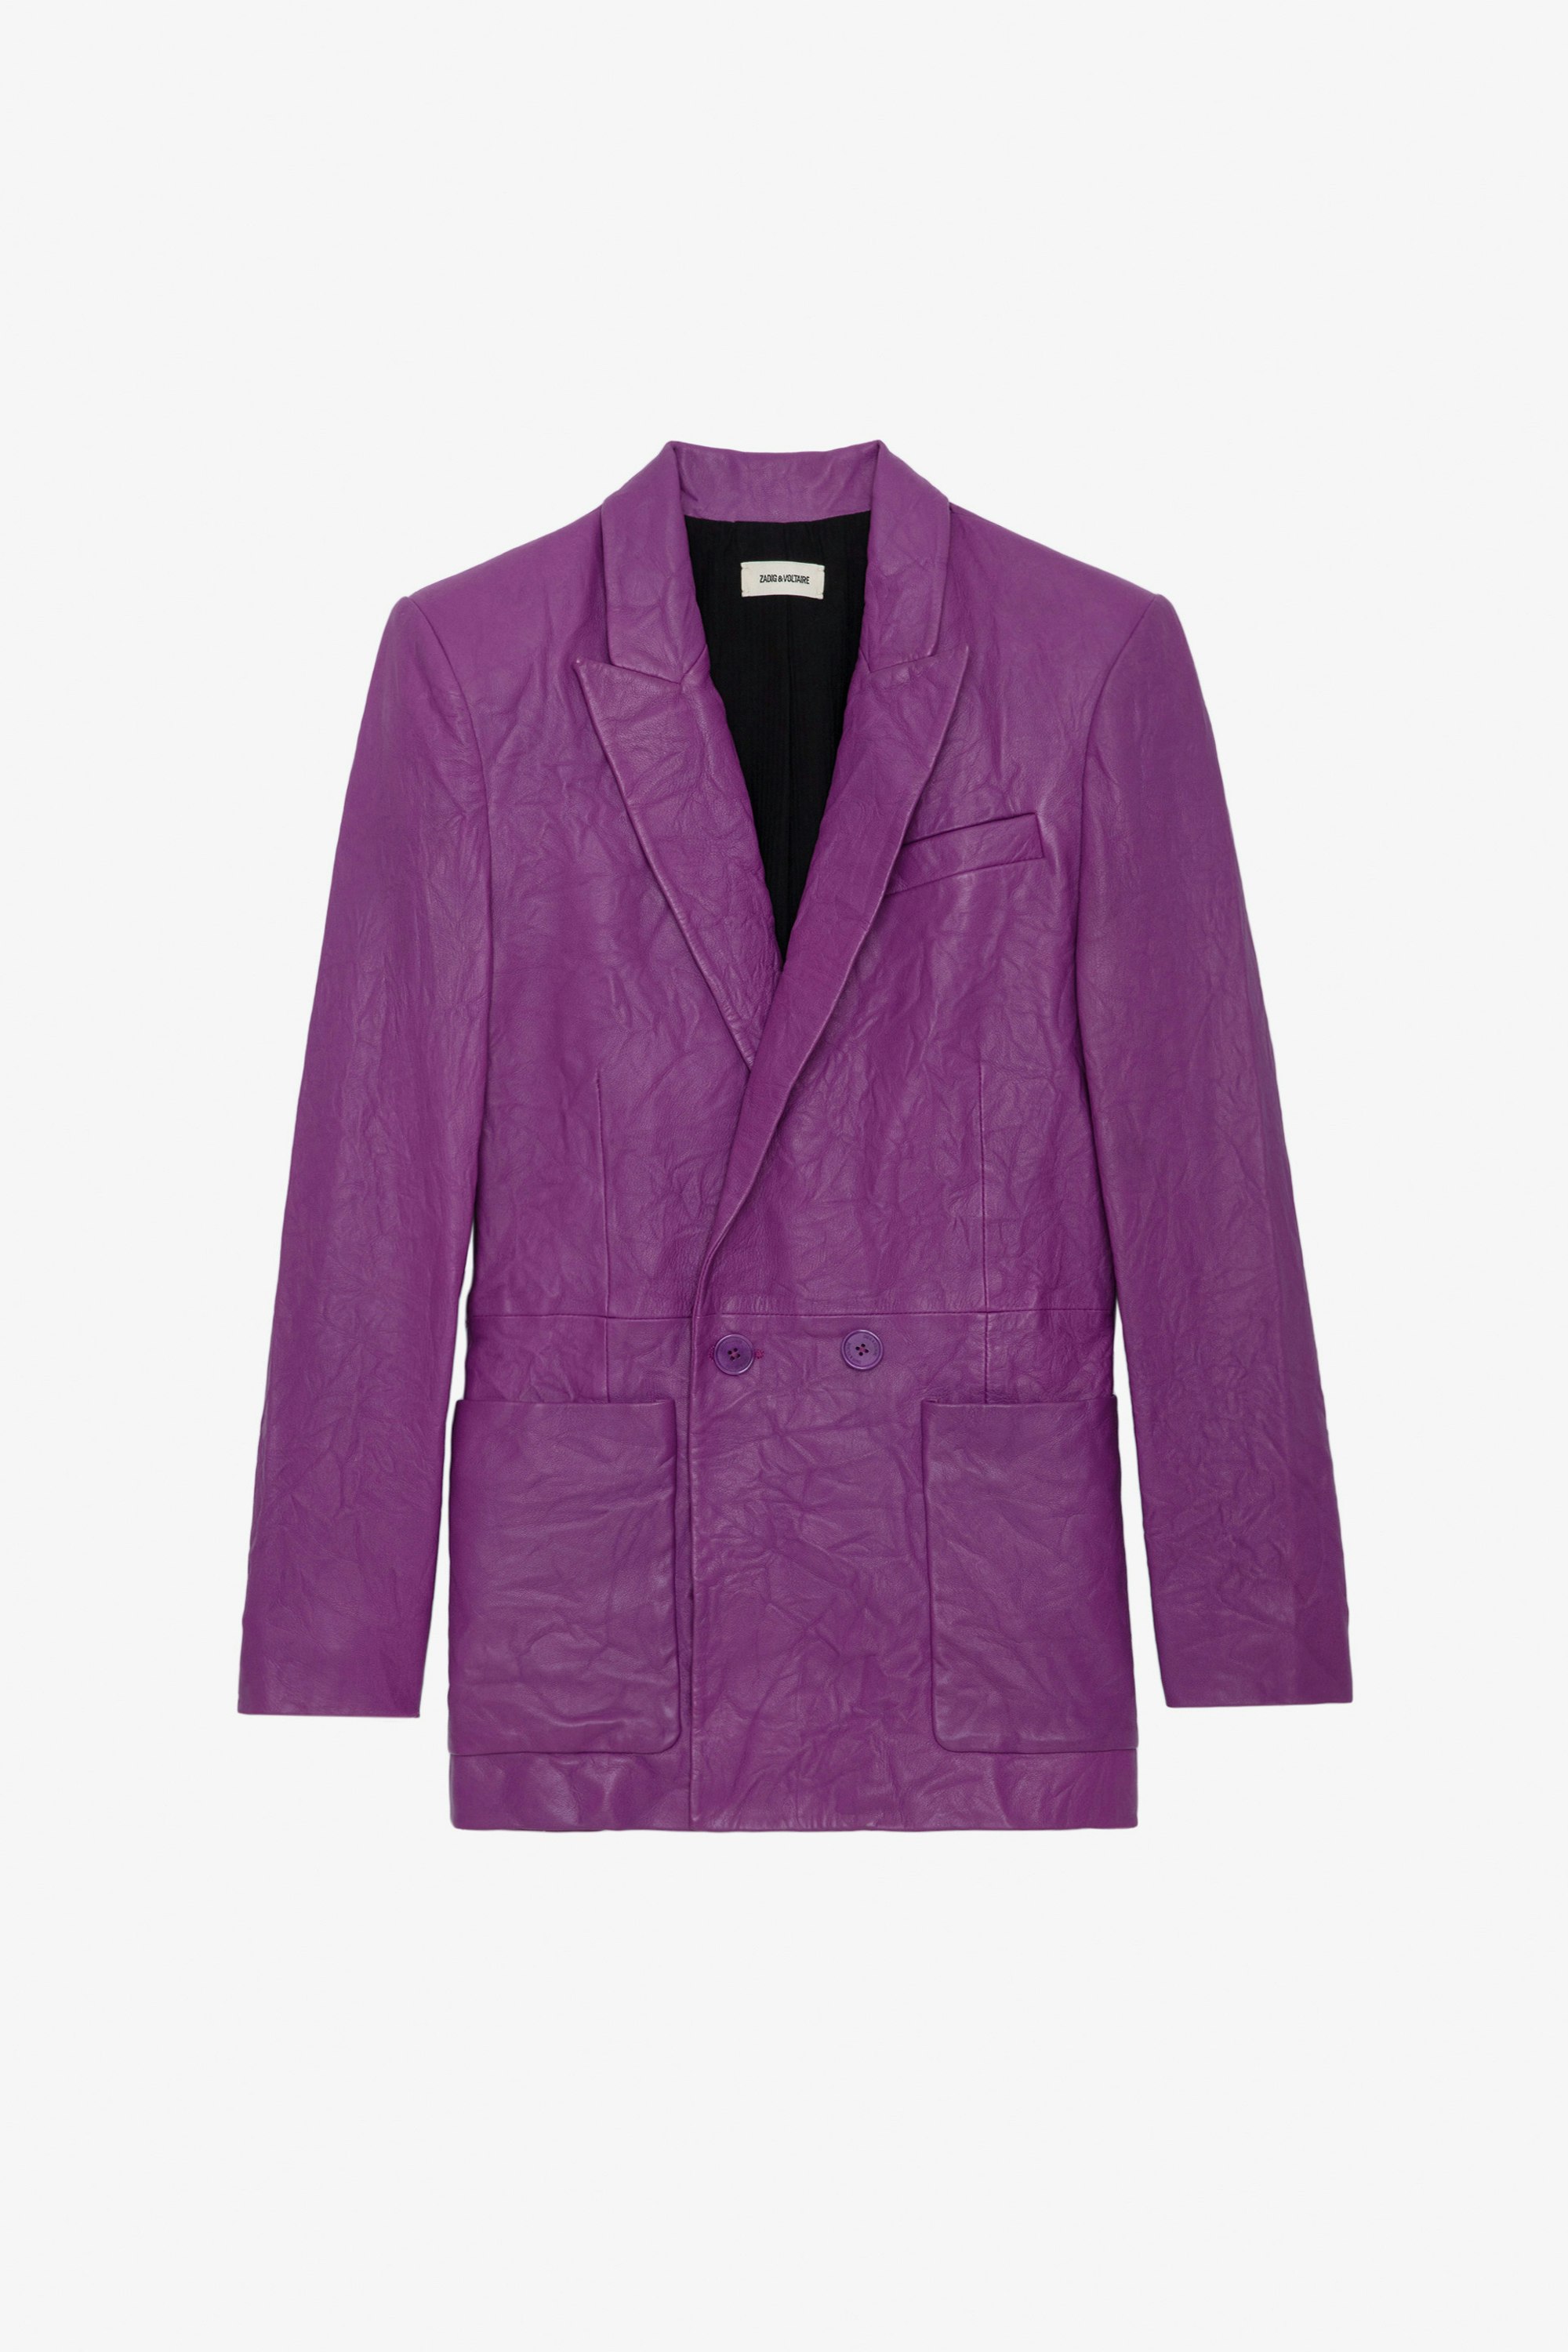 Visko レザージャケット - Women’s purple crinkled leather blazer with button fastening and pockets.